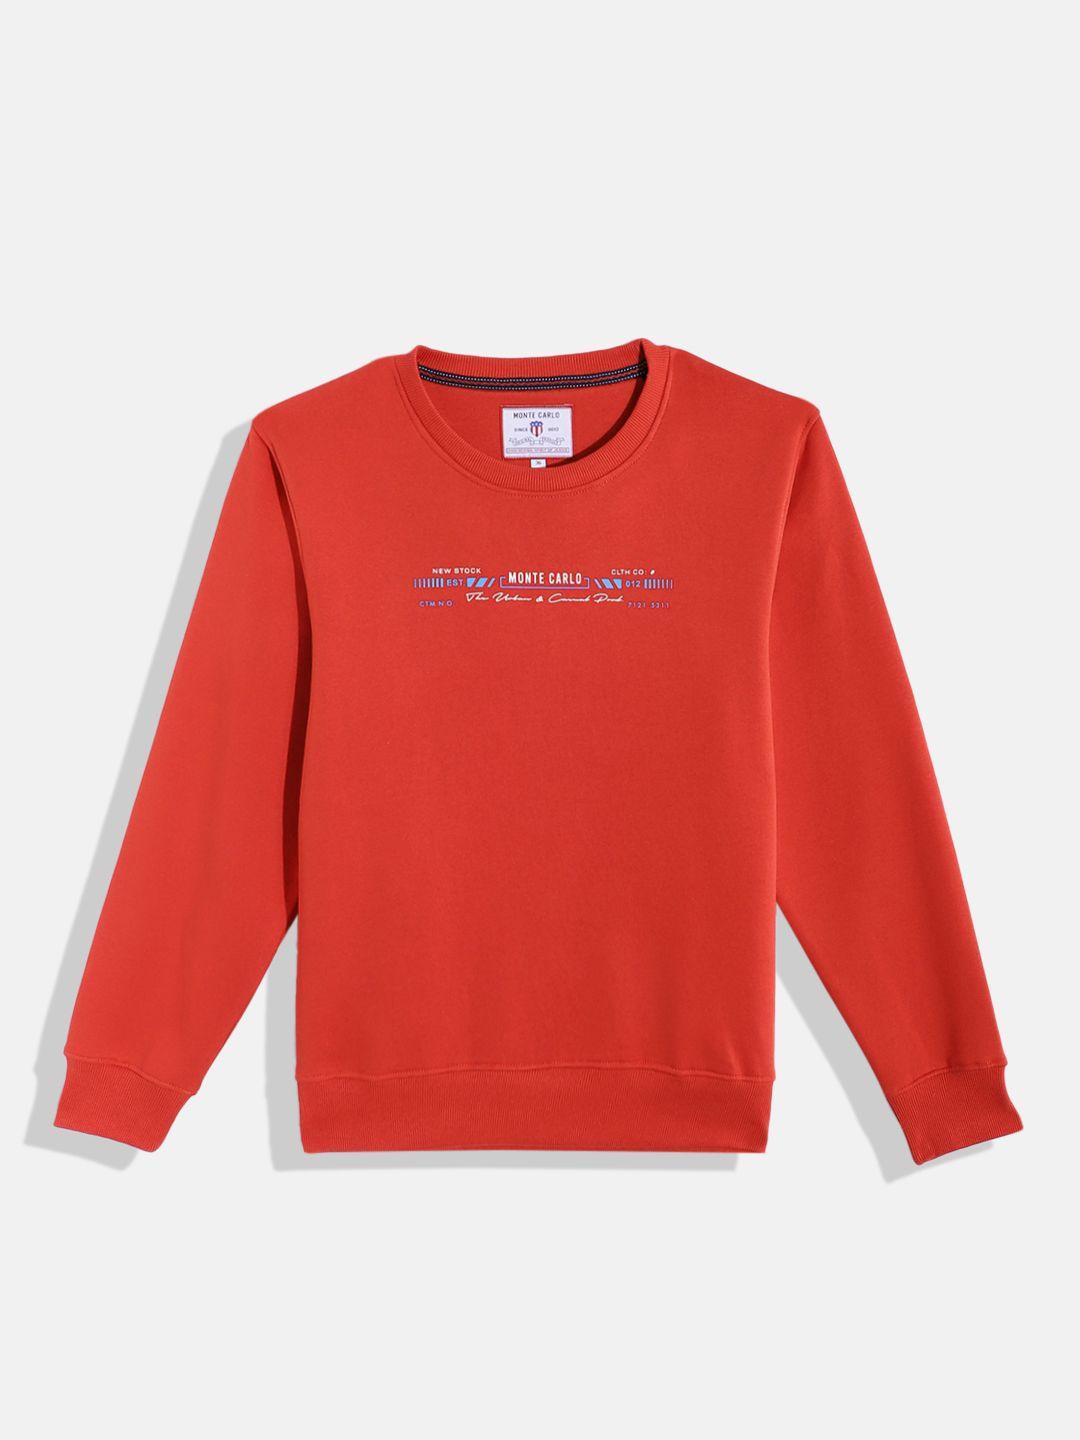 monte carlo teen boys brand logo printed detail round neck sweatshirt